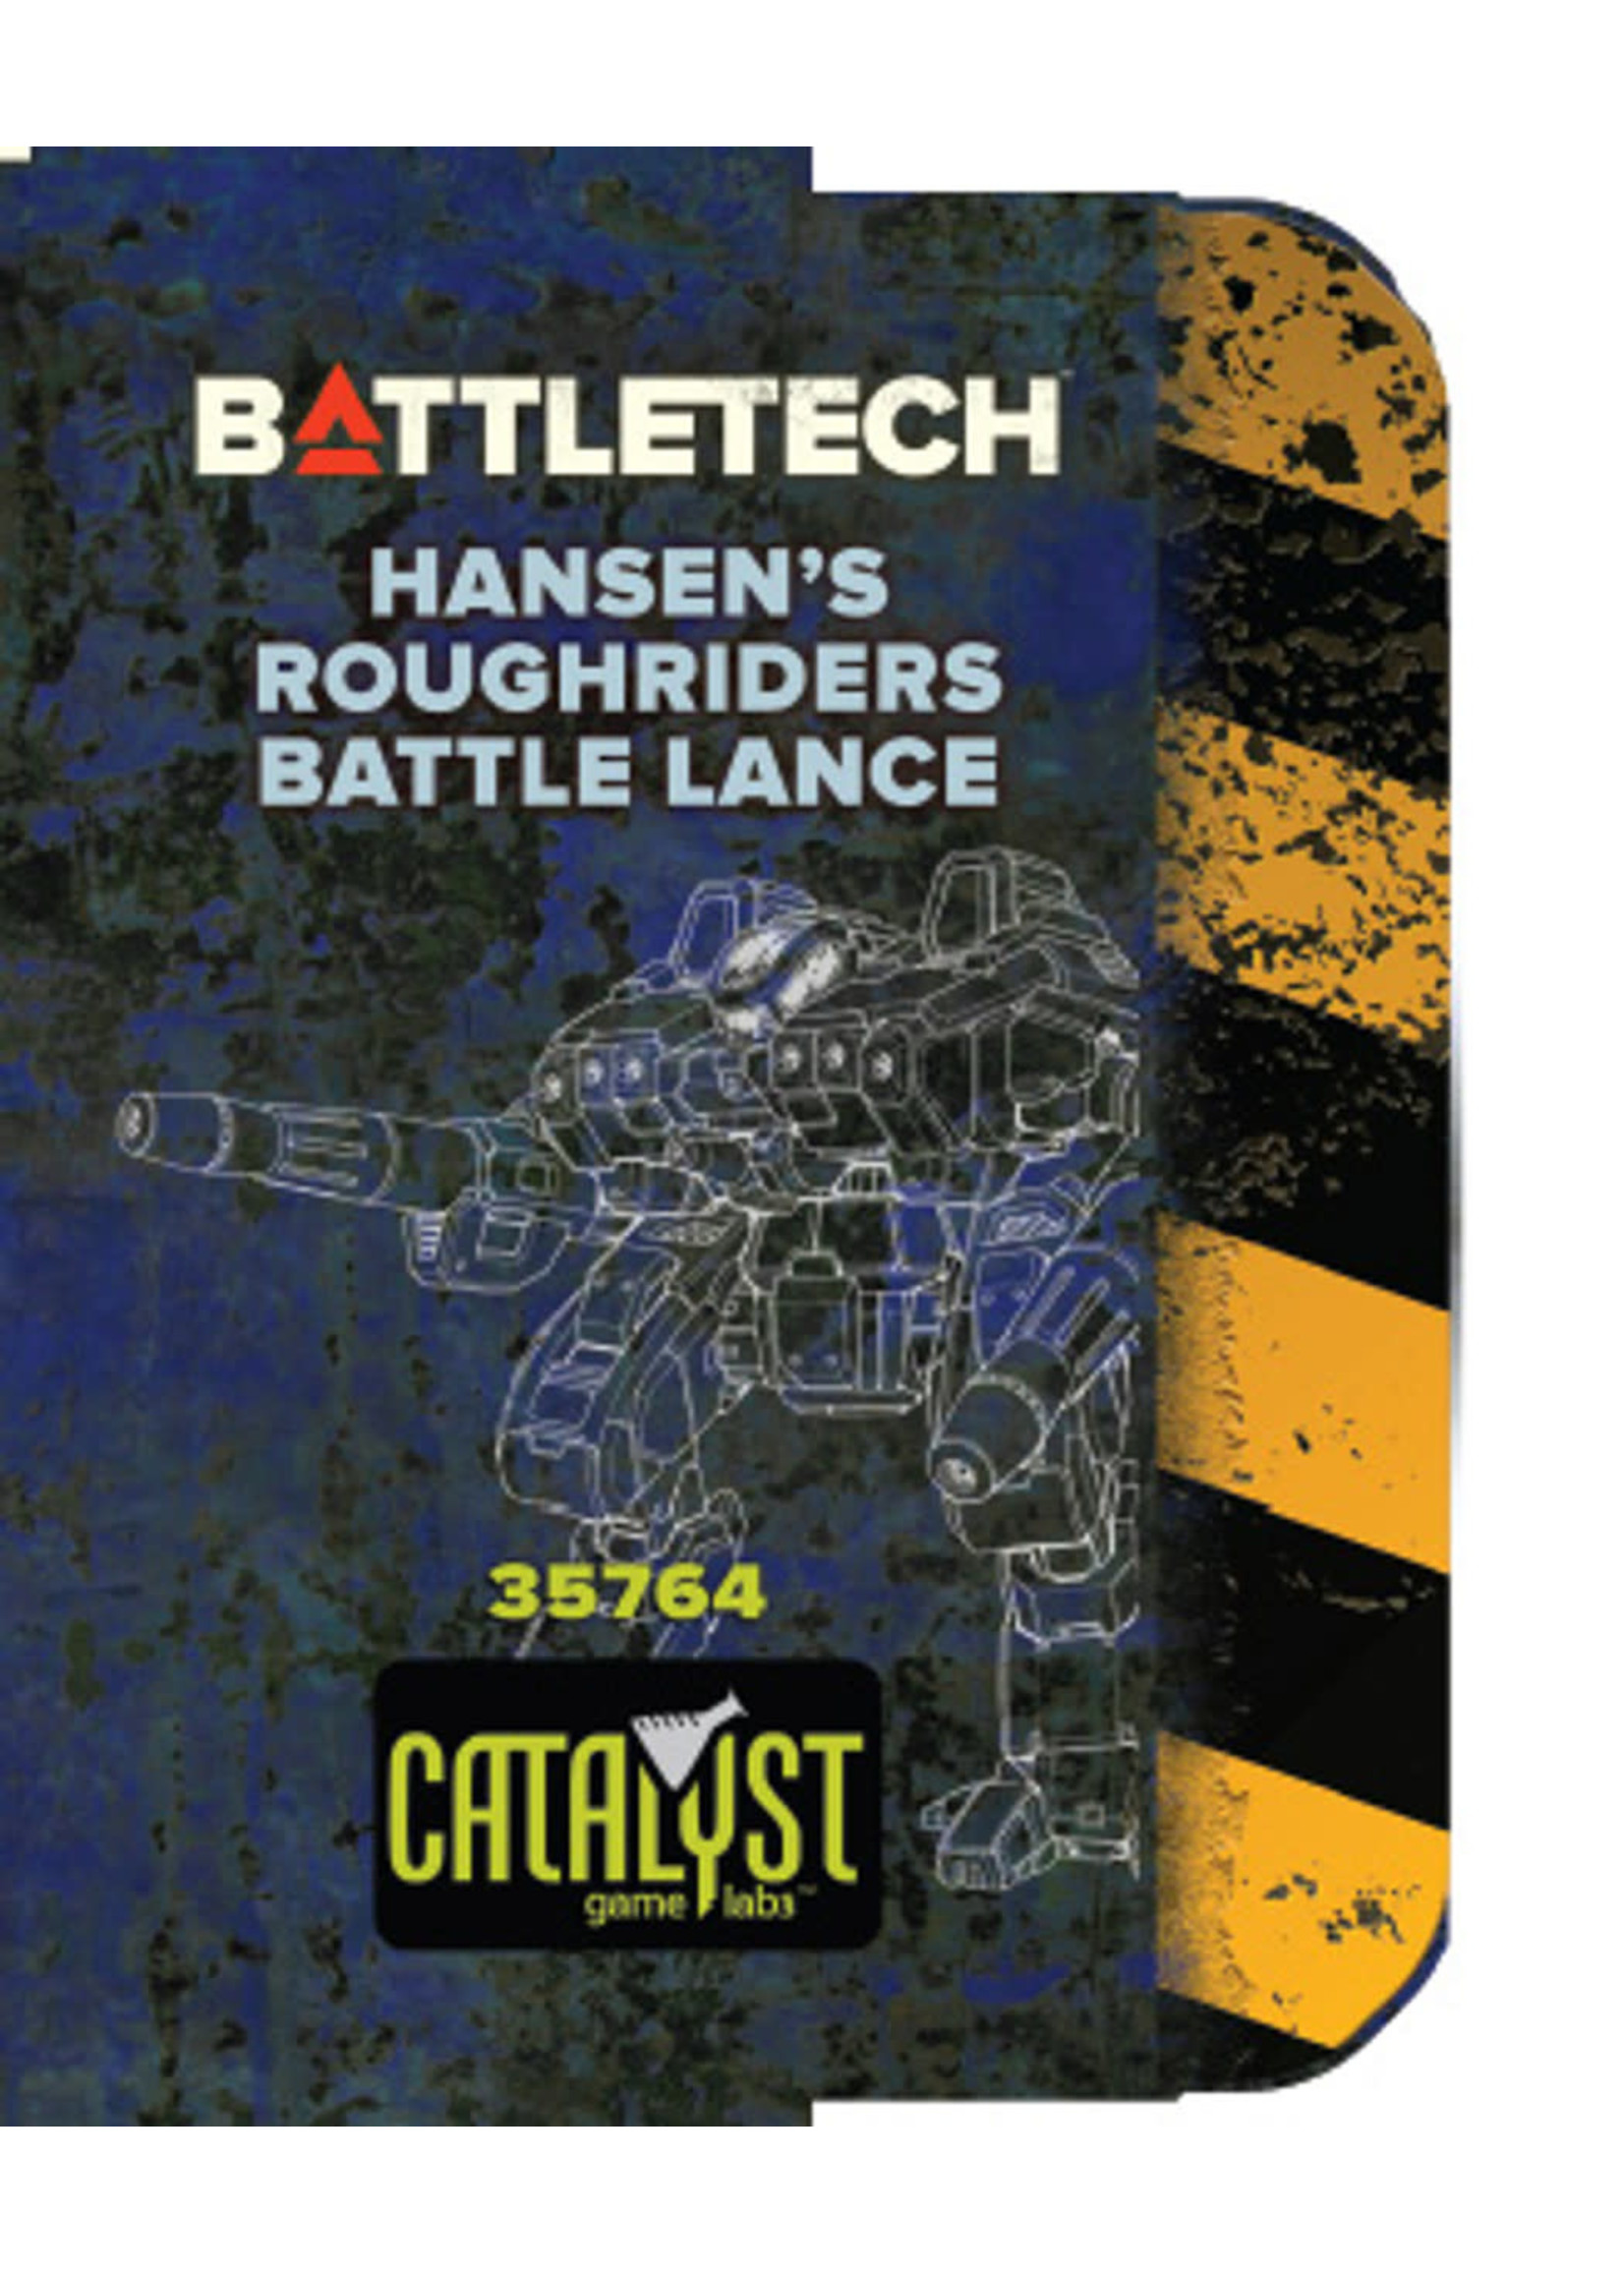 CATALYST GAME LABS BattleTech: Miniature Force Pack - Hansens Roughriders Battle Lance